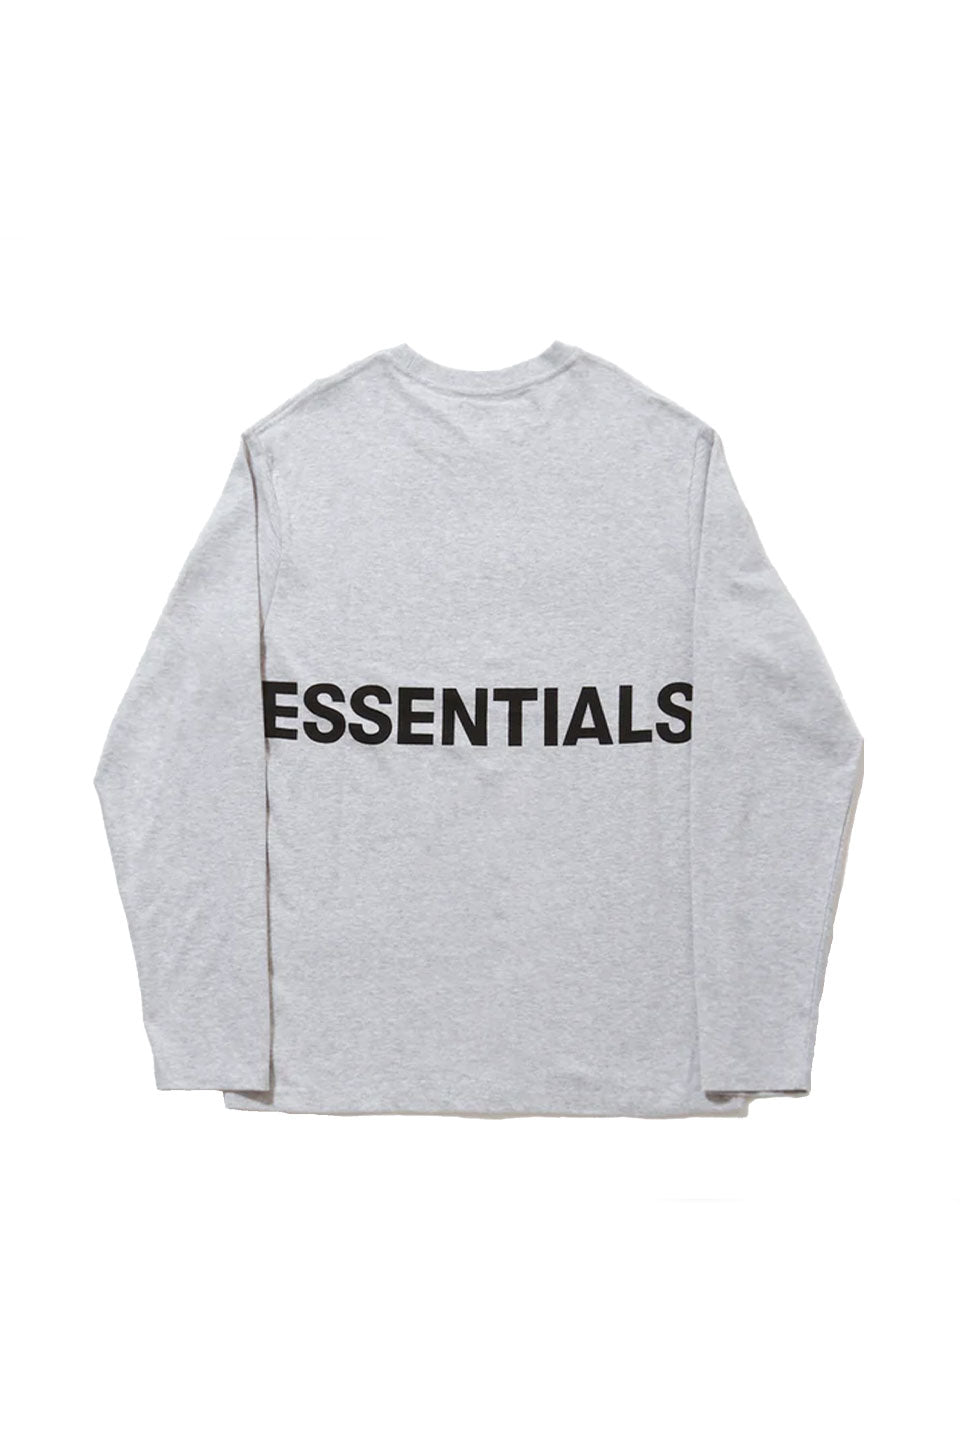 XLサイズ チャコール essentials long sleeve tシャツ